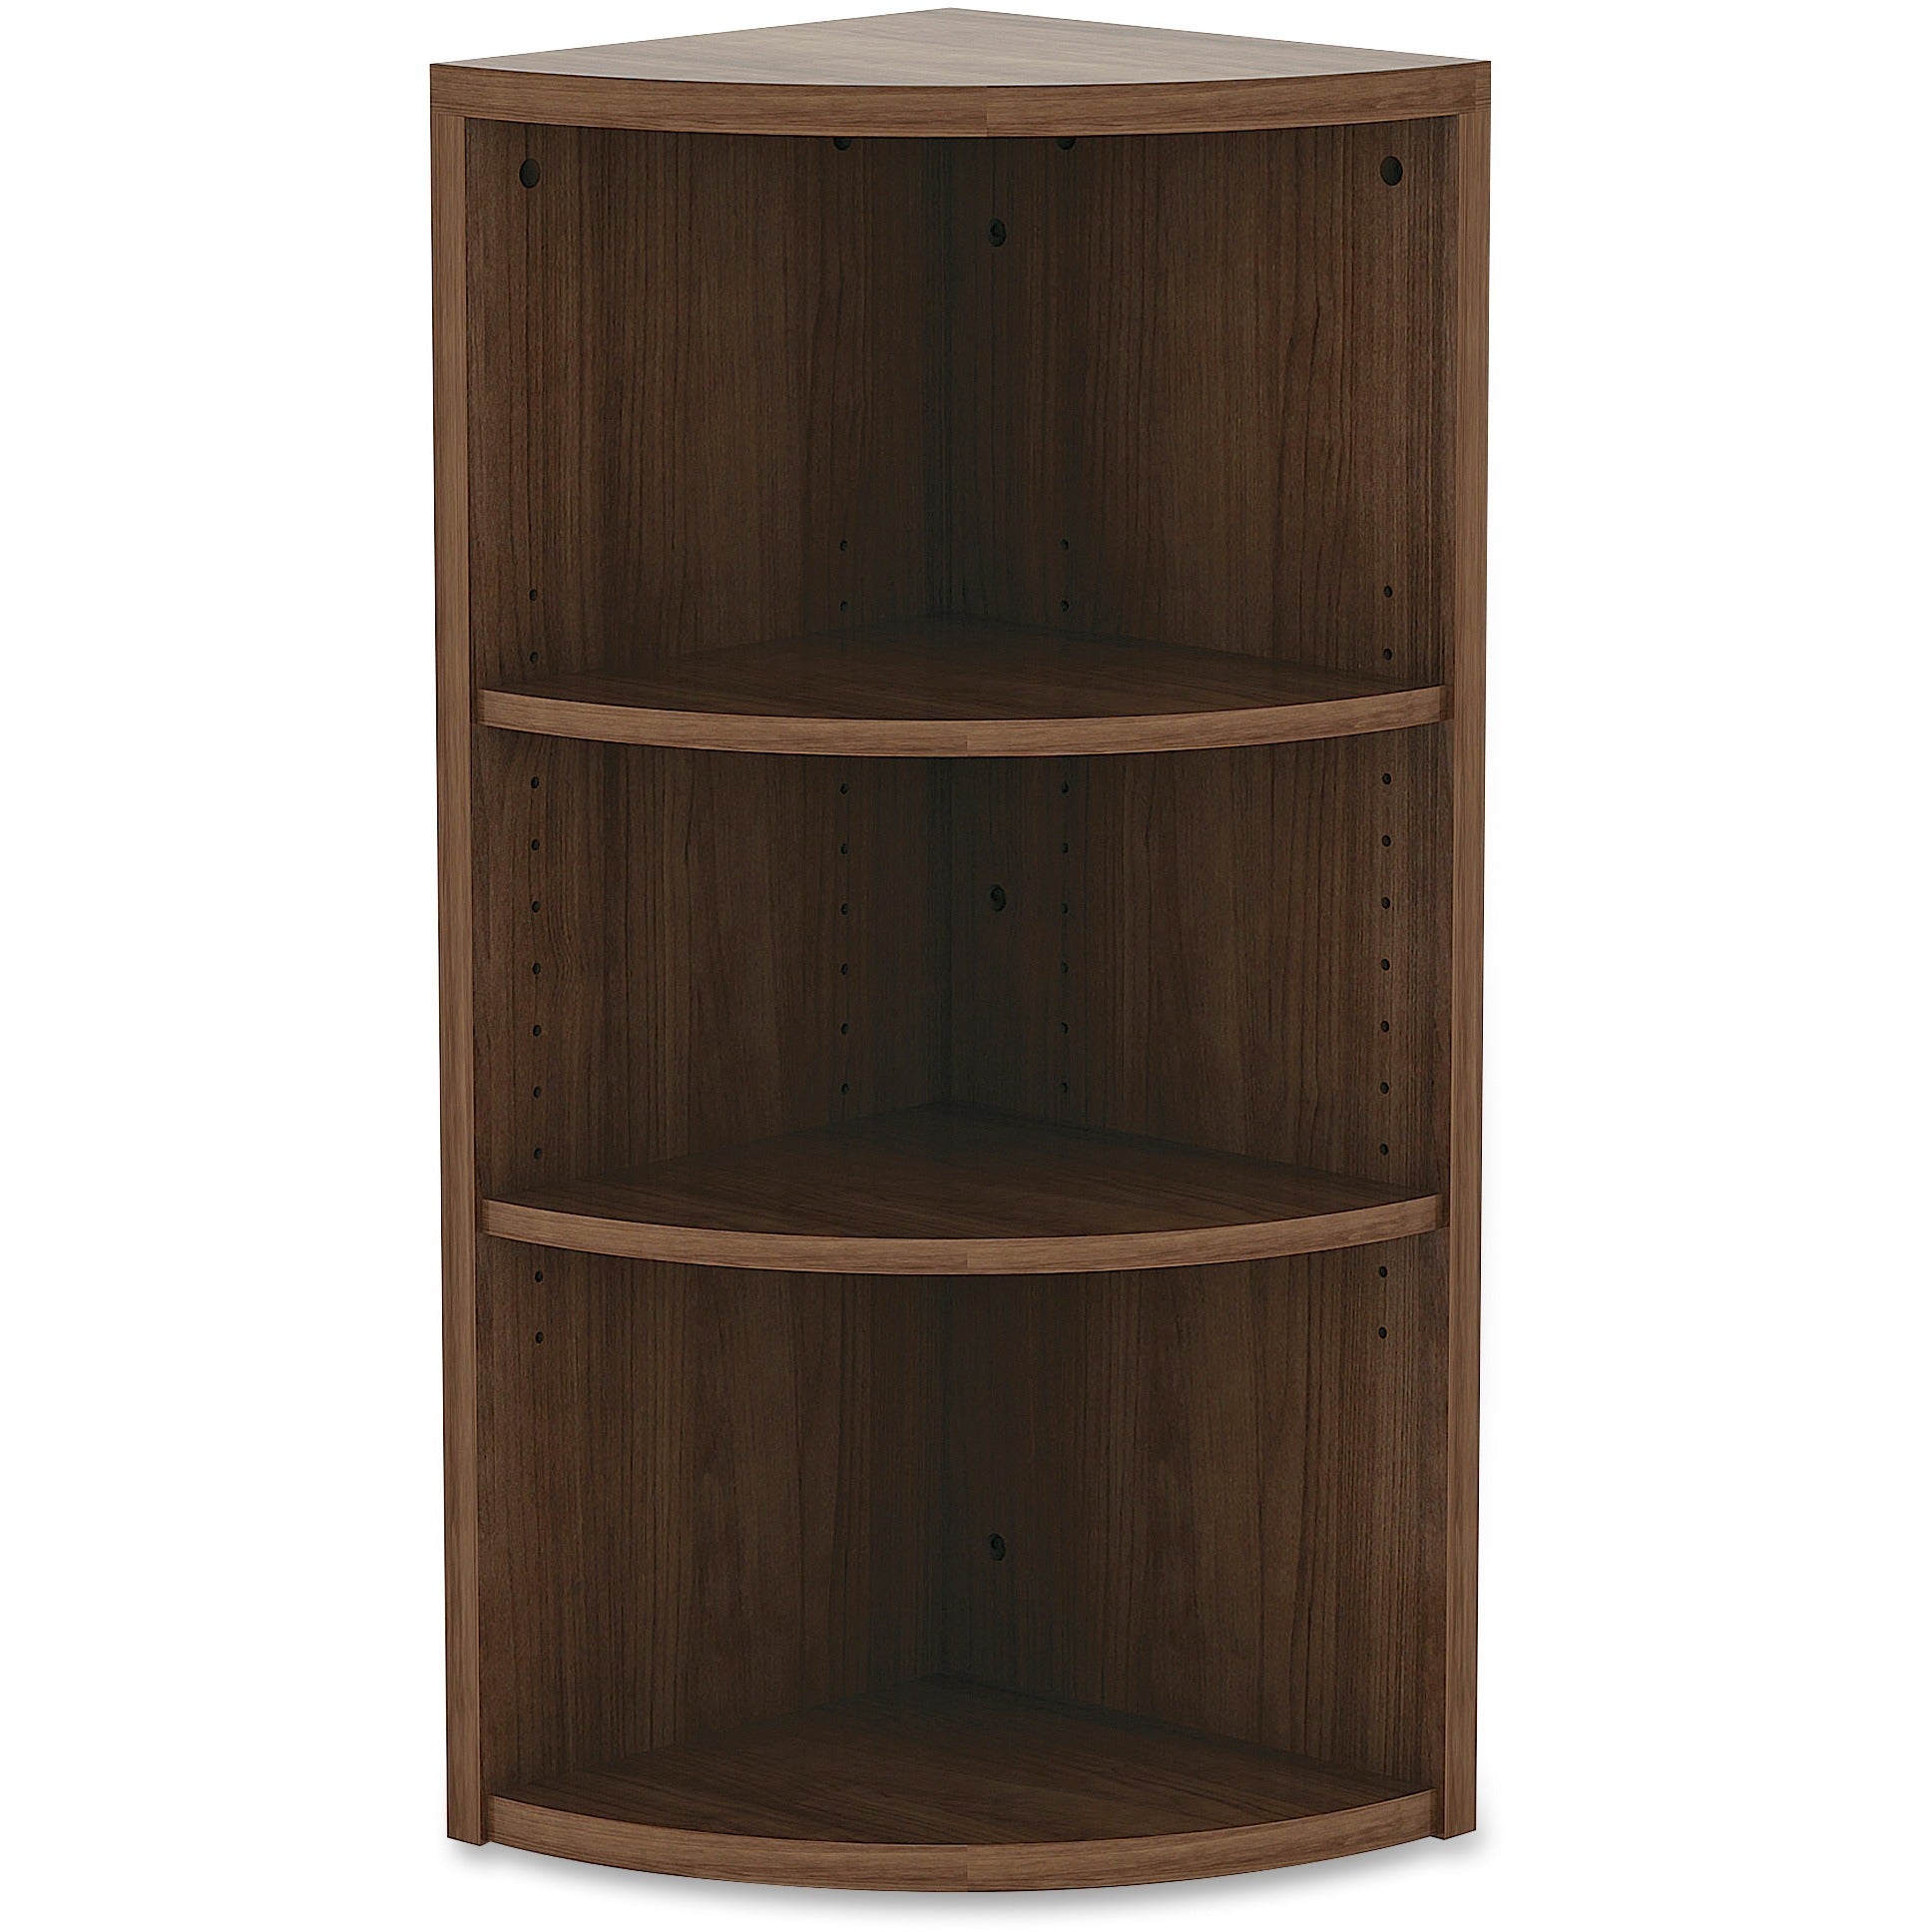 Lorell Essentials Series Hutch End Corner Bookcase - 36" Height x 14.8" Width37.8" Length%Floor - Walnut - Laminate, Polyvinyl Chloride (PVC) - 1 Each - 2